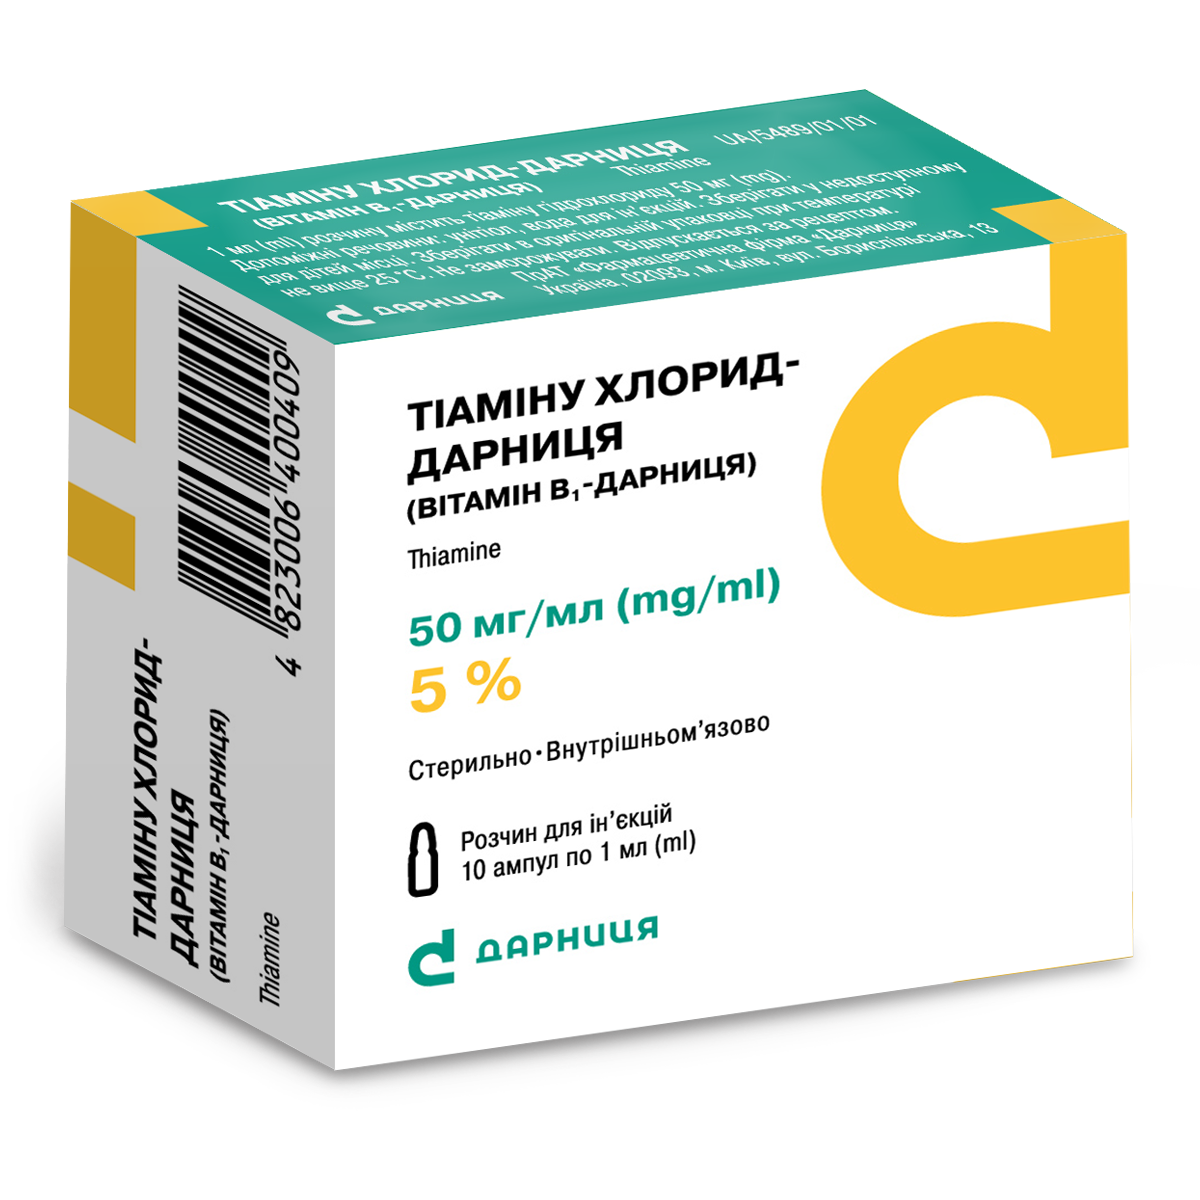 Thiaminе chloride-Darnitsa (vitamin B1-Darnitsa)